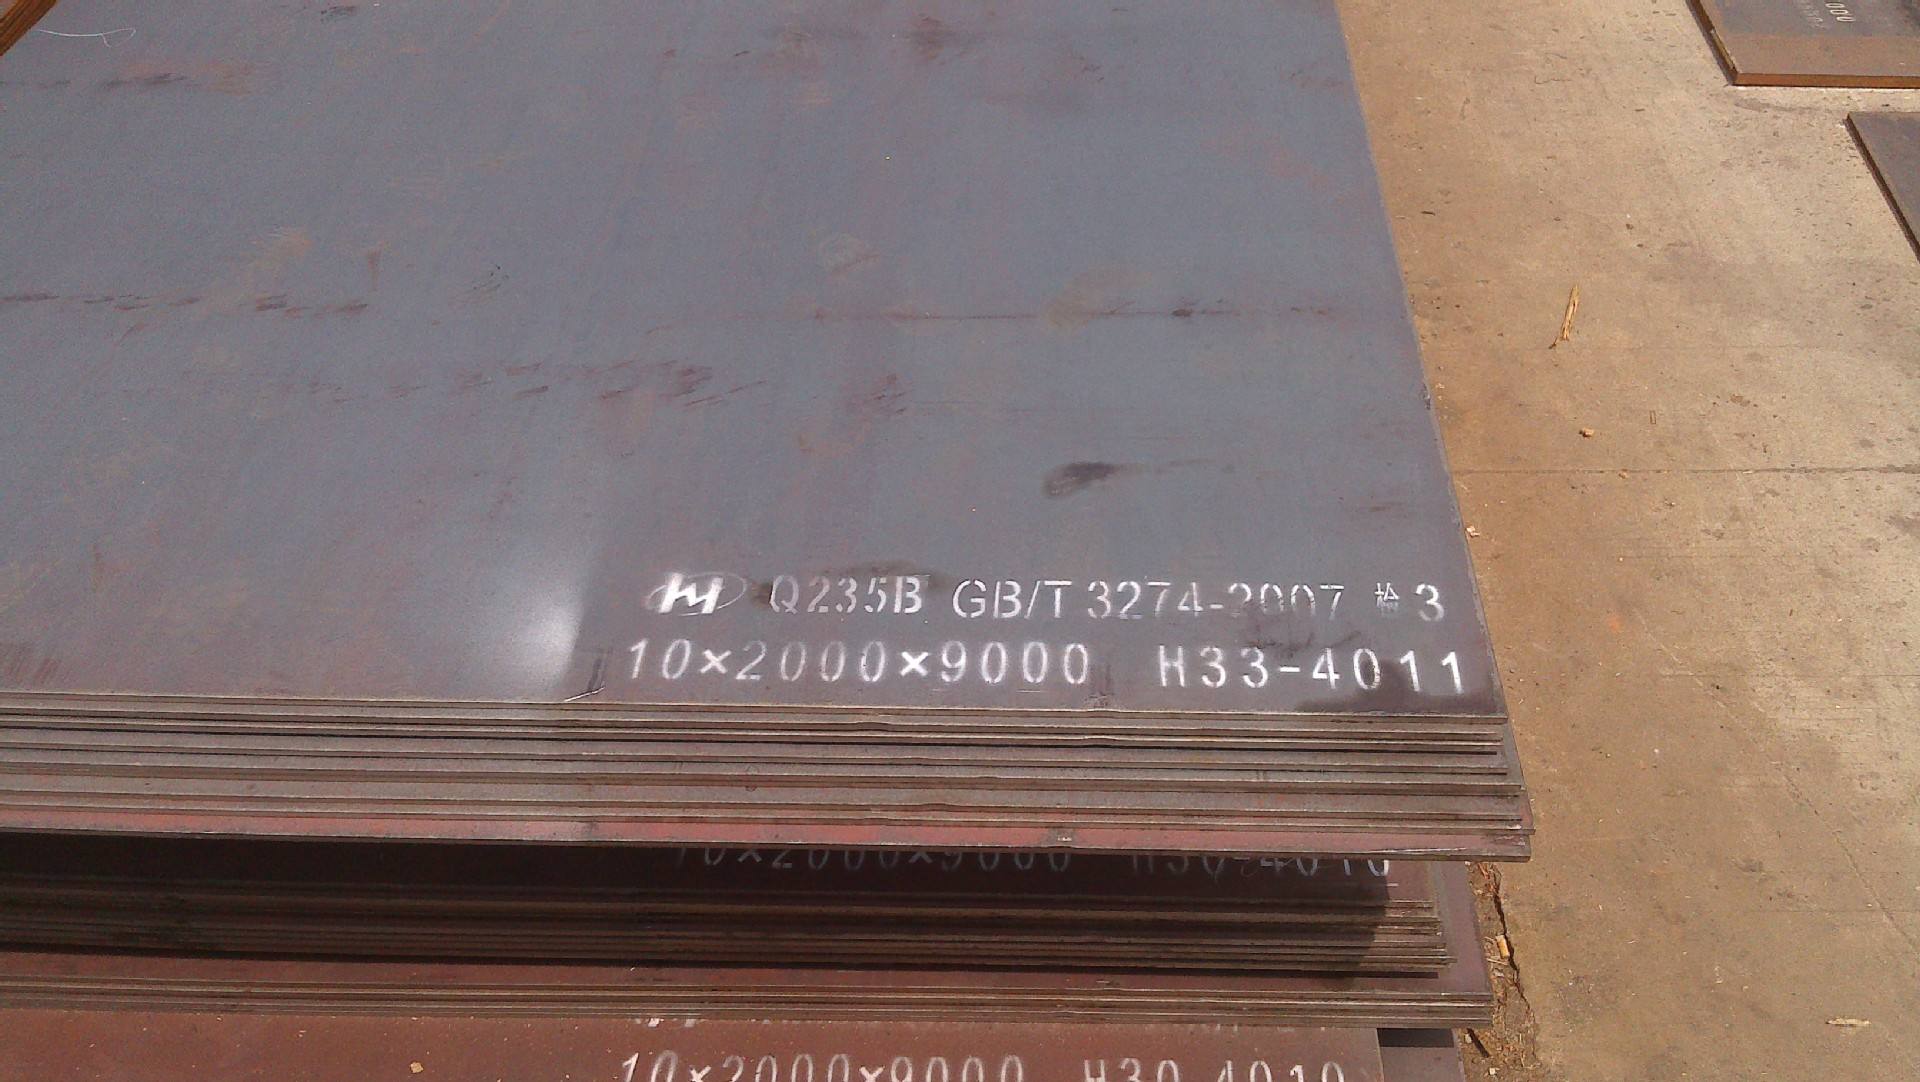 Q235 Carbon Steel Plate